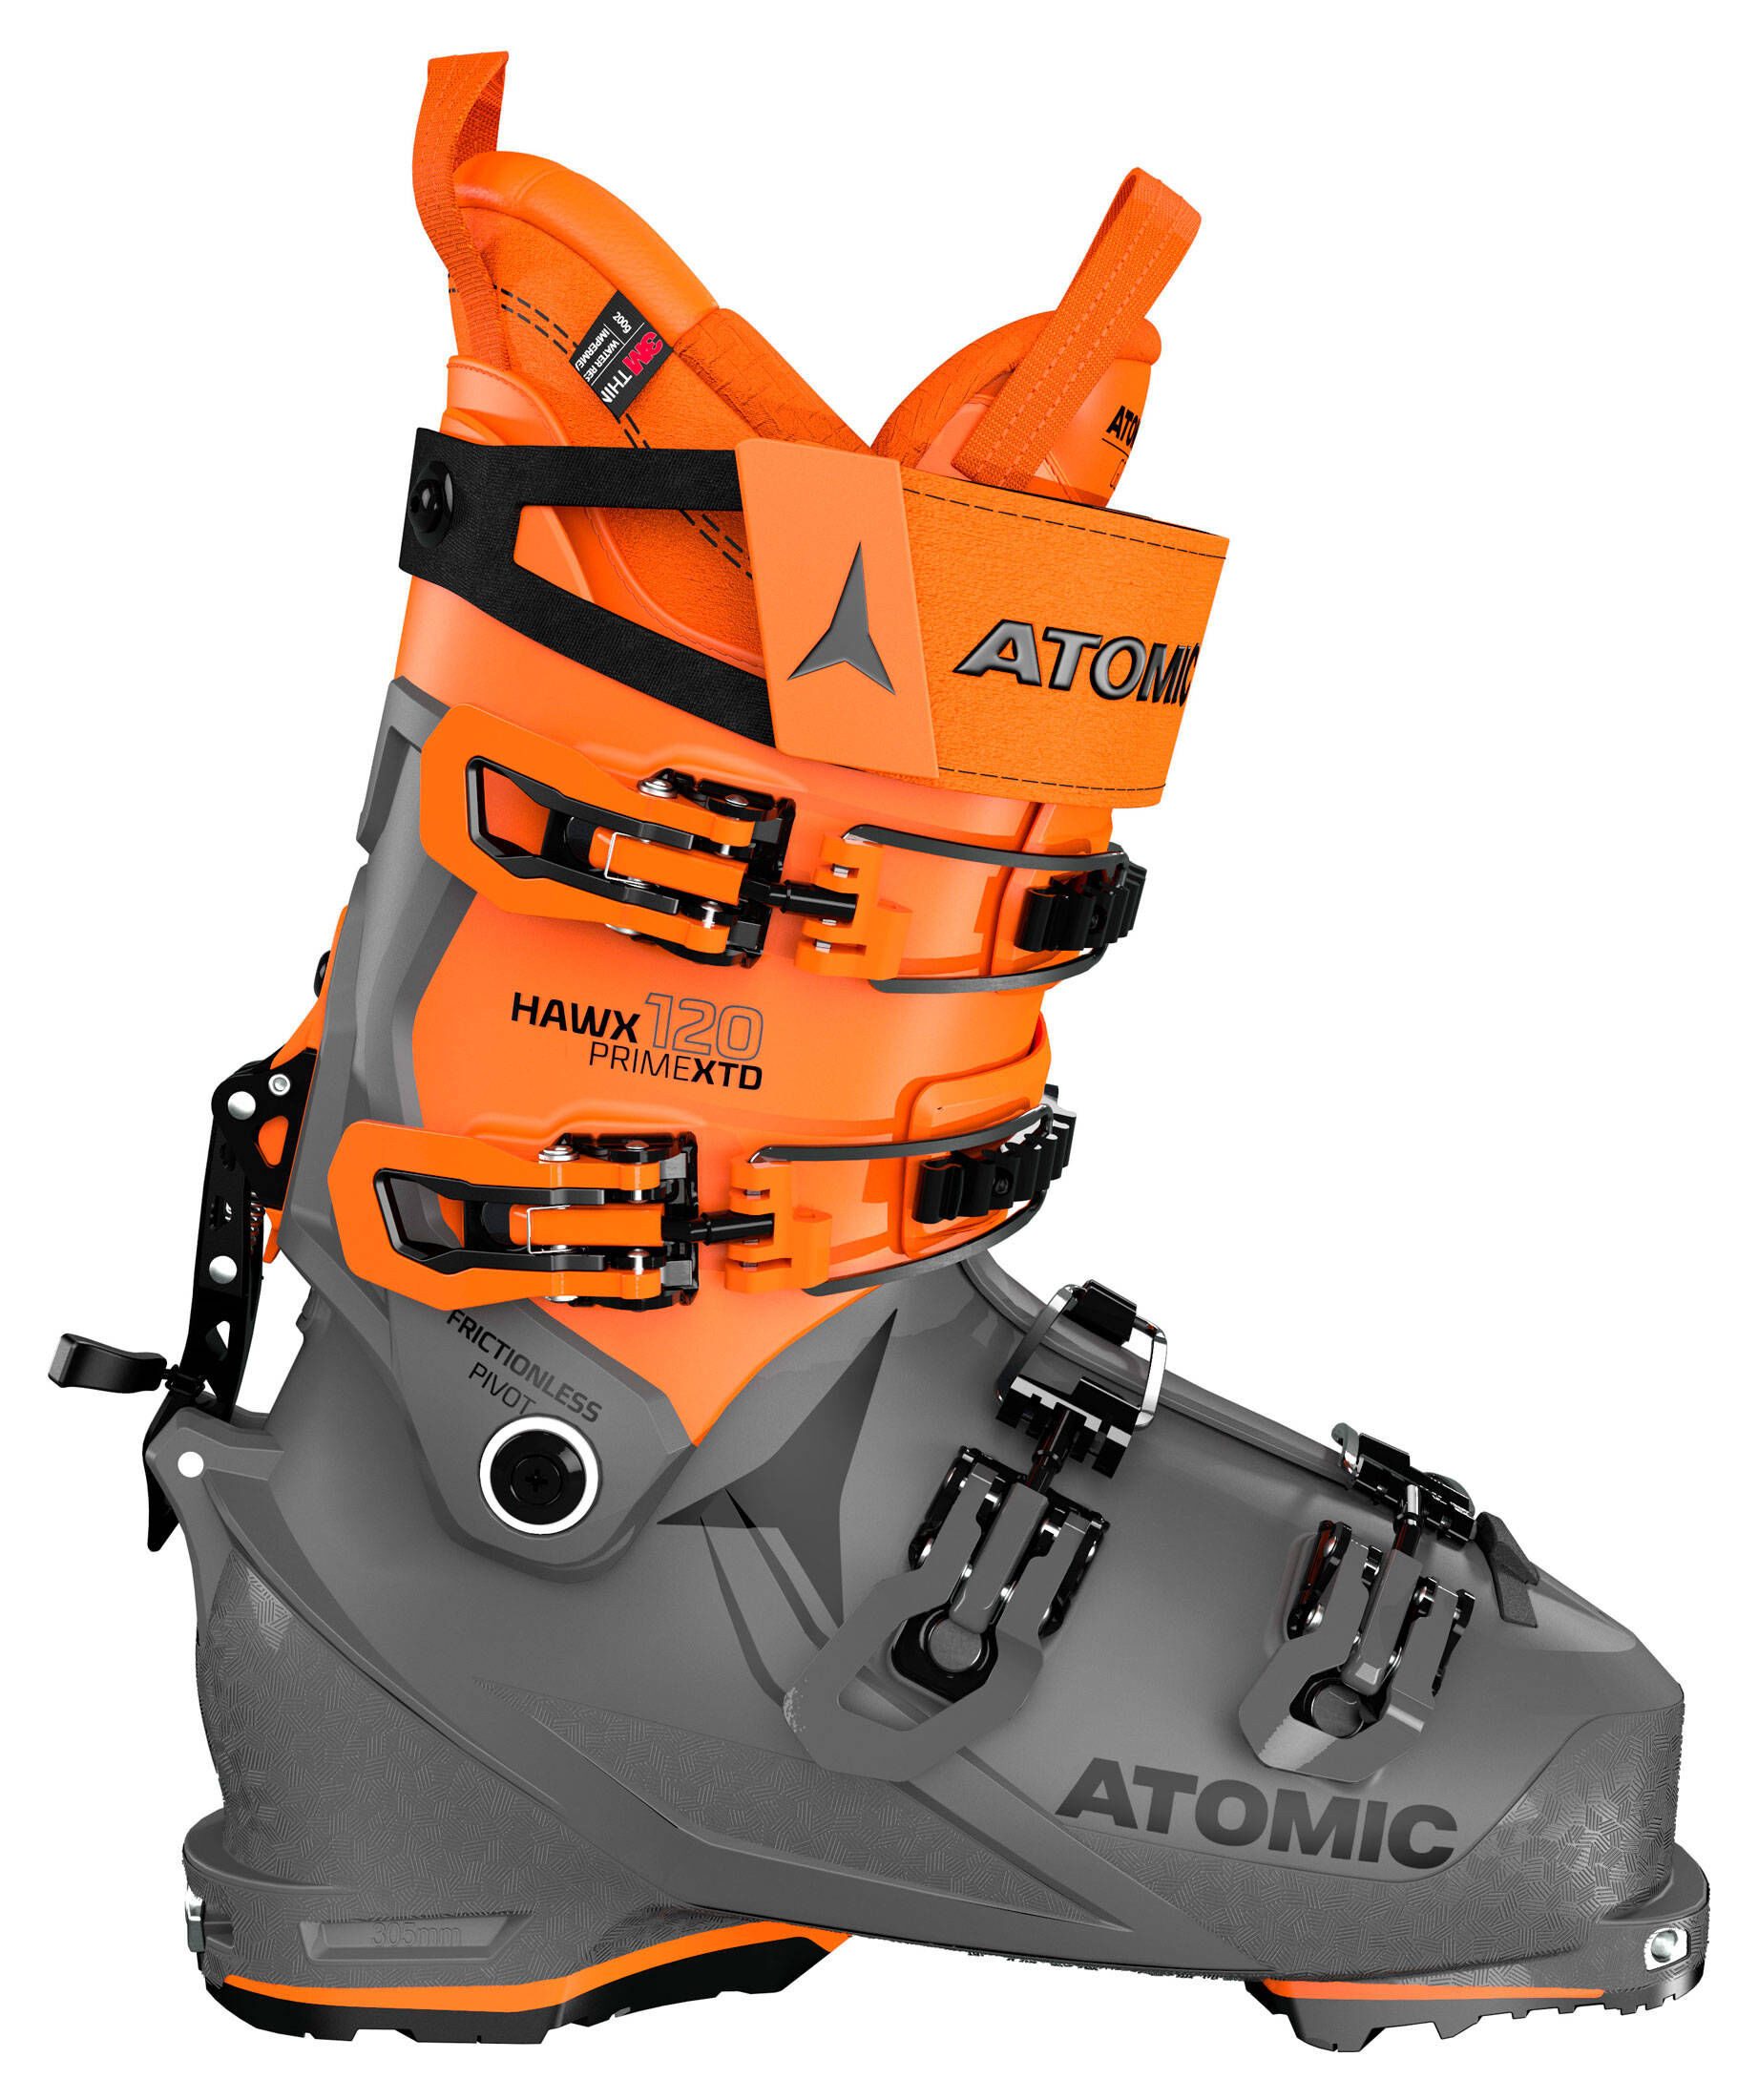 Atomic Skischuhe "Atomic Hawx Prime XTD 120 Teck GW" Skischuh